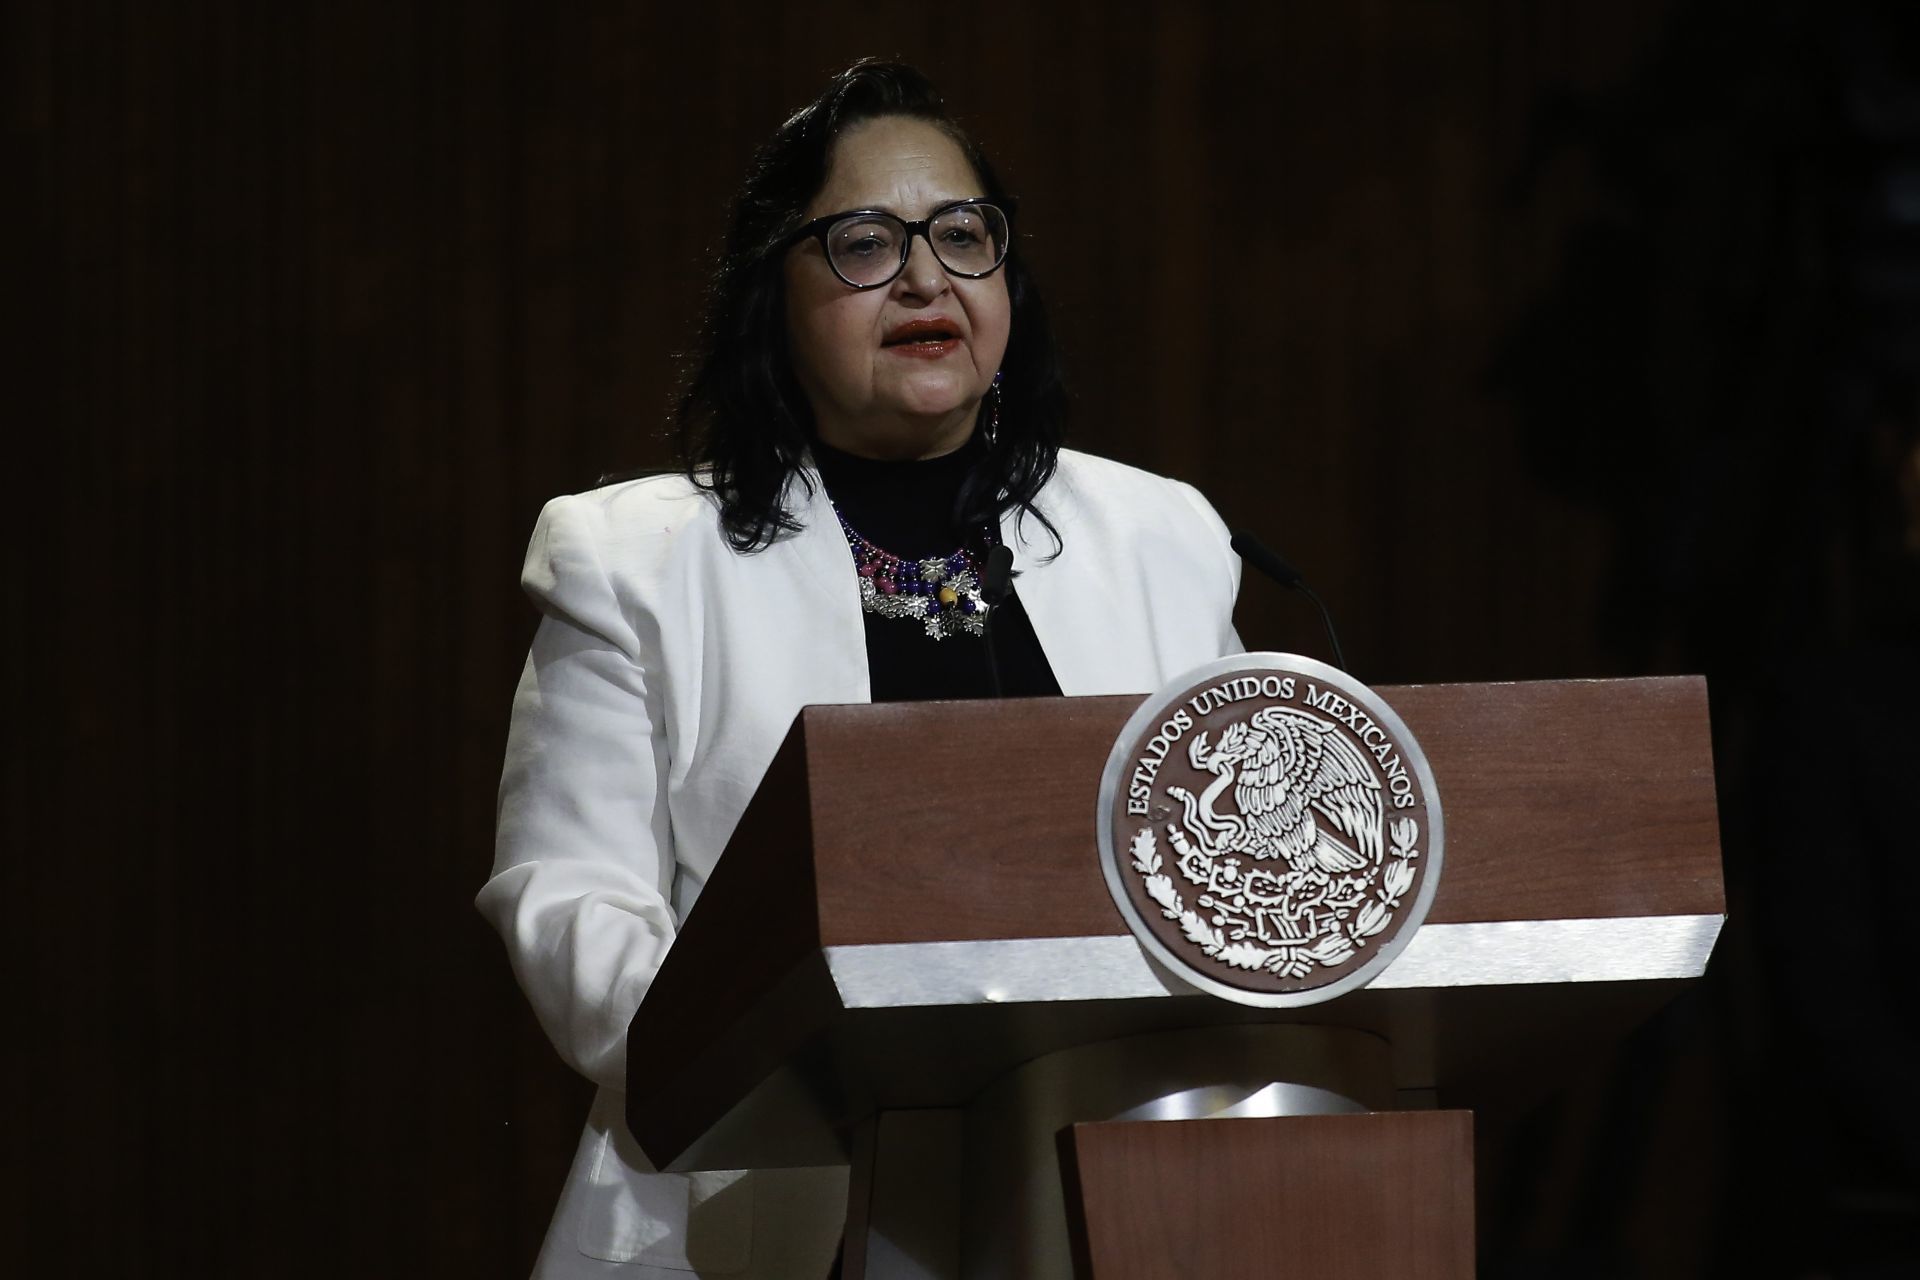 Gobierno volvió a exponer a Norma Piña por presunta corrupción dentro del Poder Judicial  